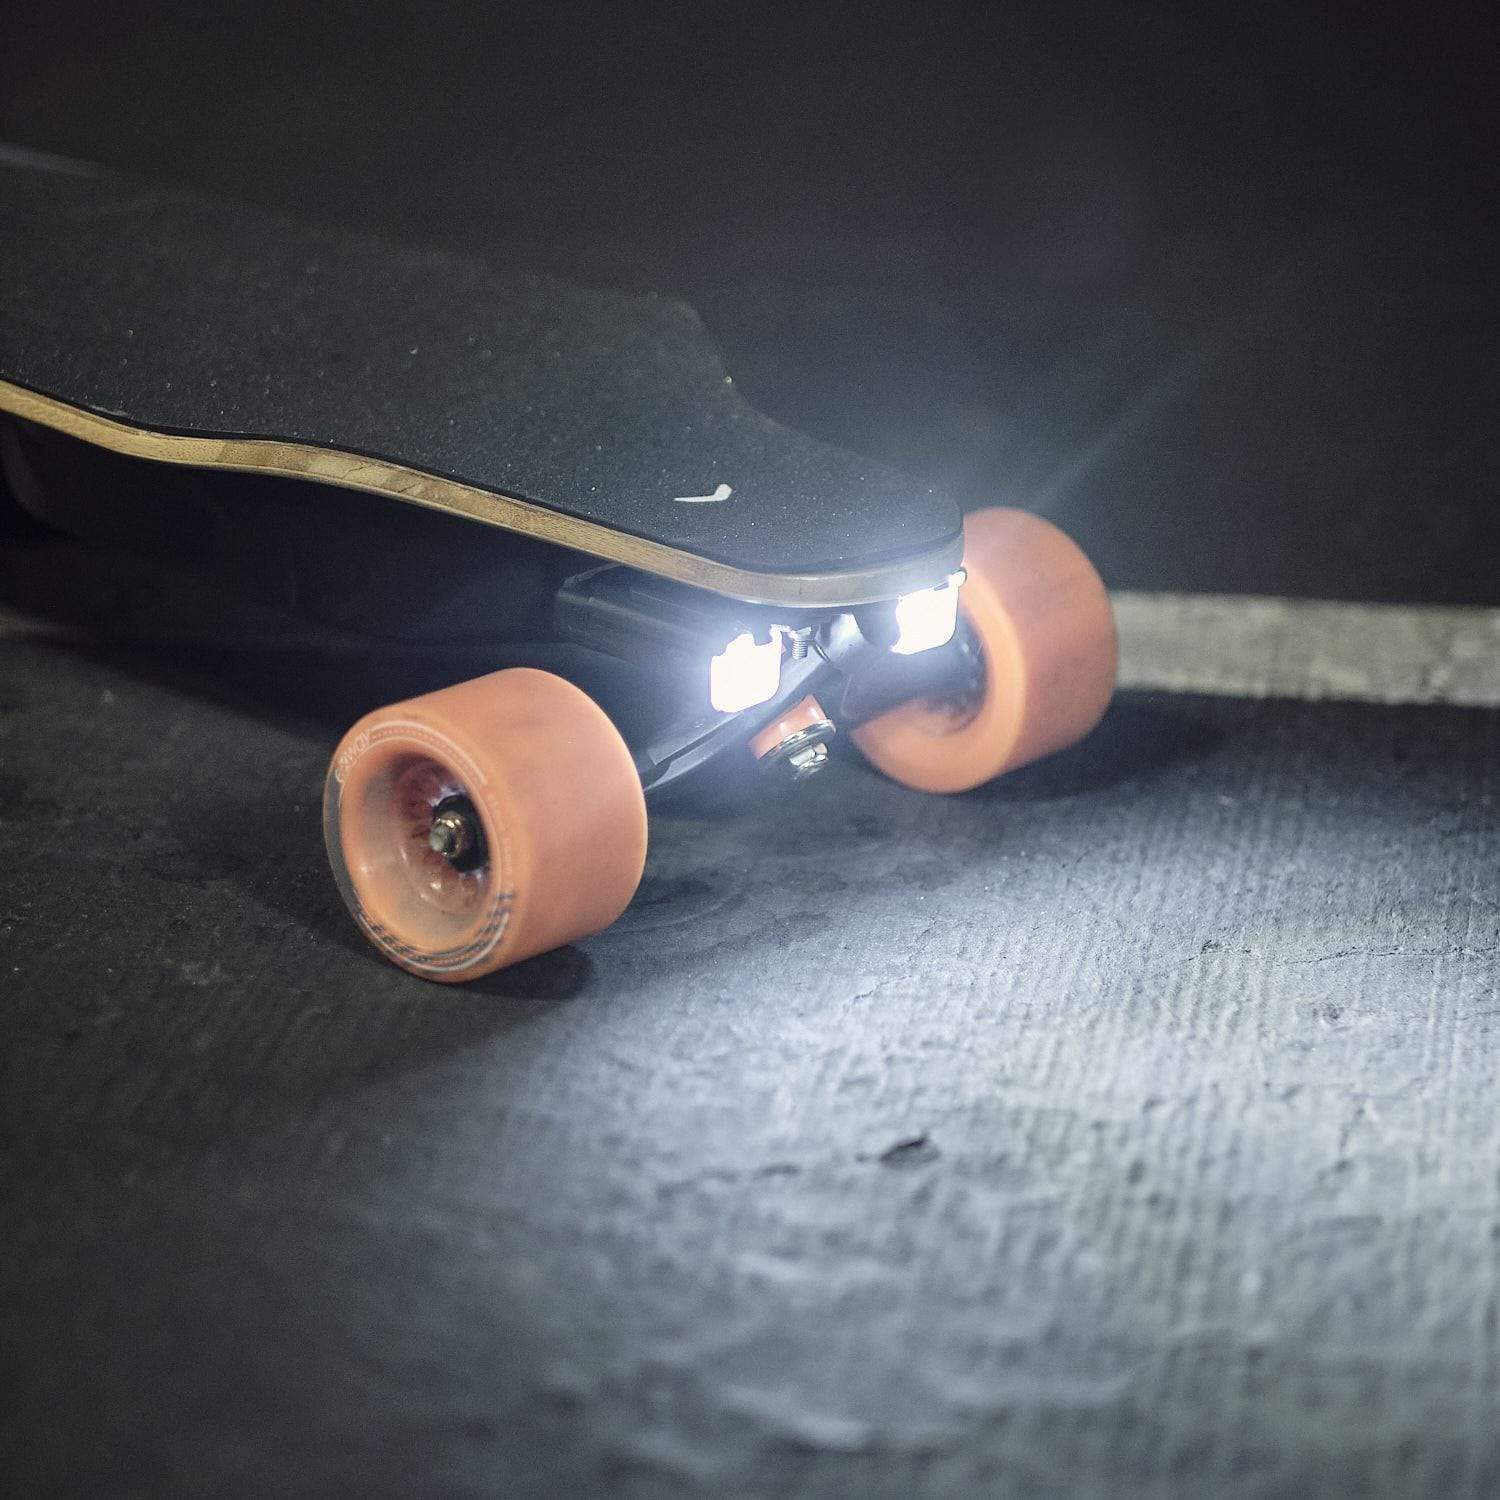 SL-300 Headlights & SL-R1 Rear Lights Skateboard Bundle